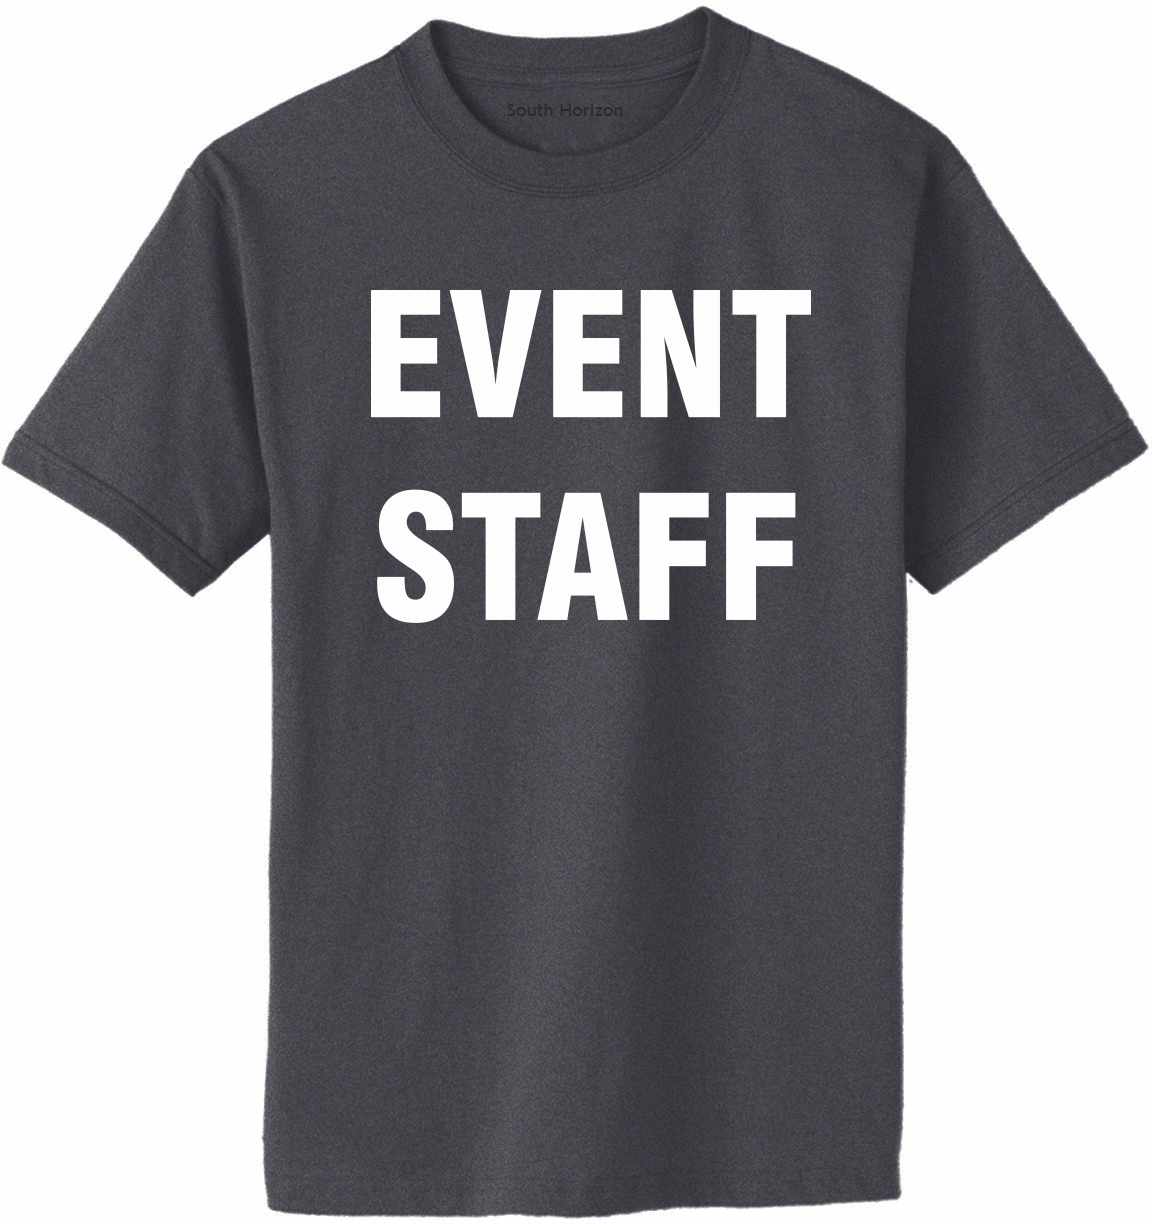 EVENT STAFF Adult T-Shirt